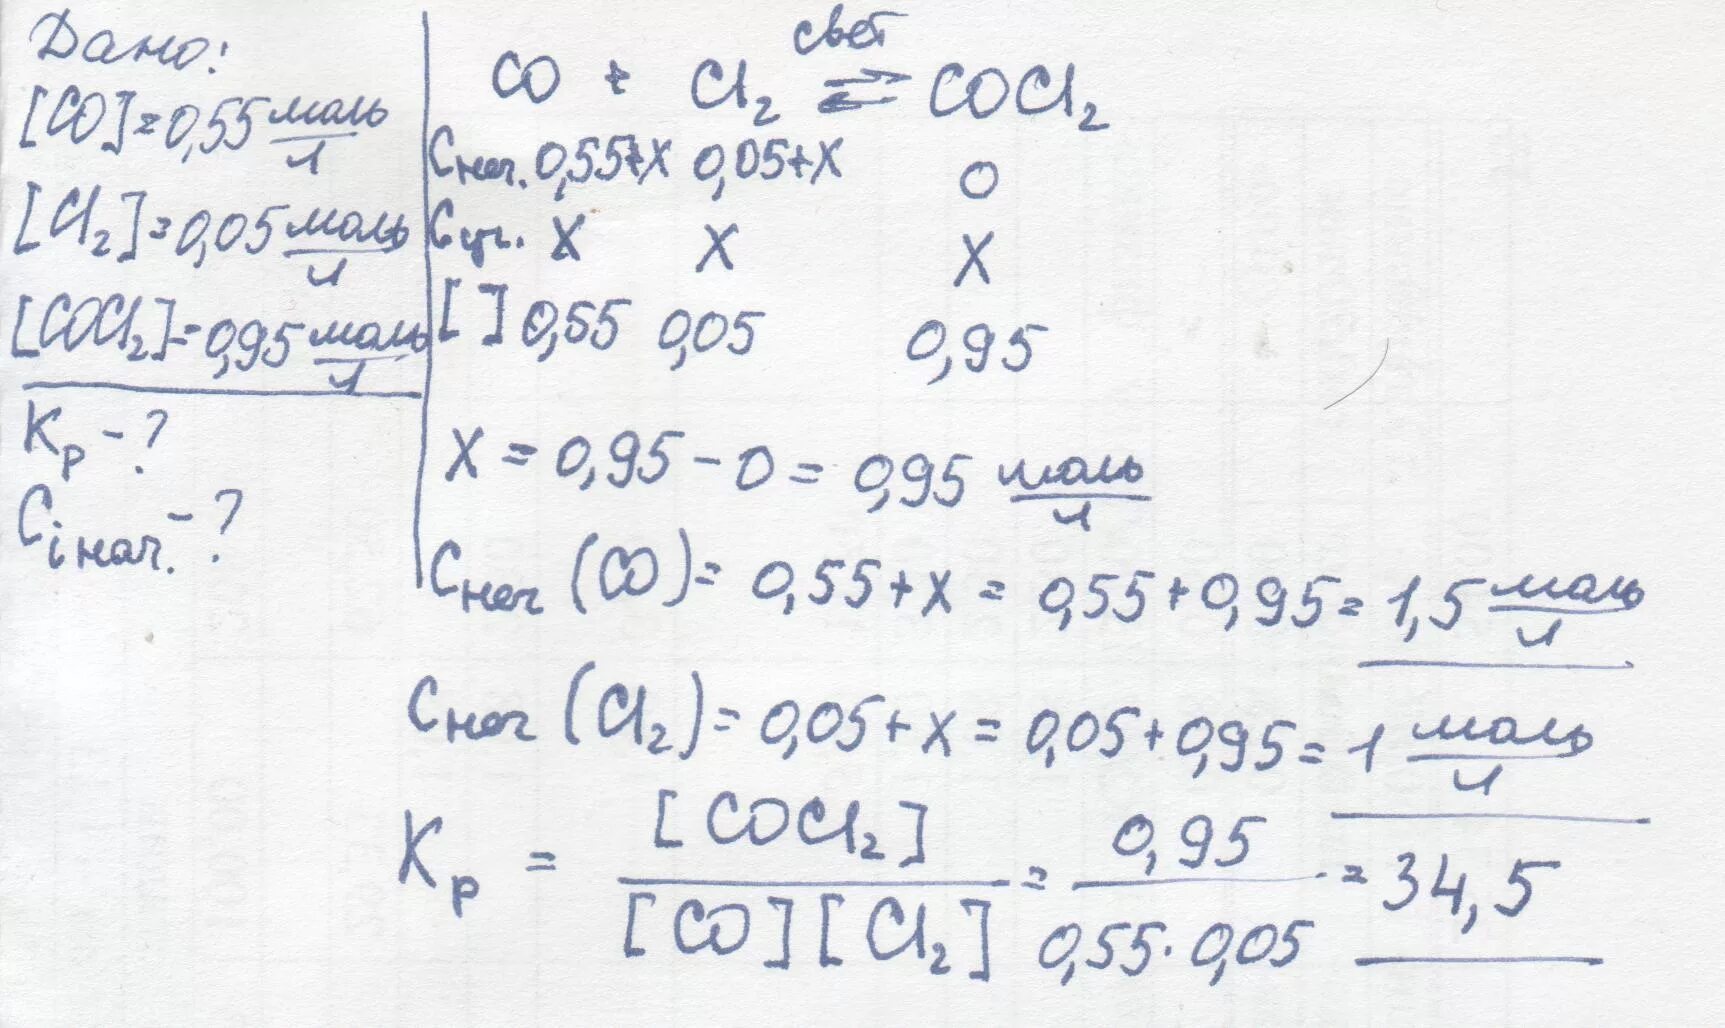 Молярная масса фосгена в г/моль cocl2. В реакции co cl2 cocl2